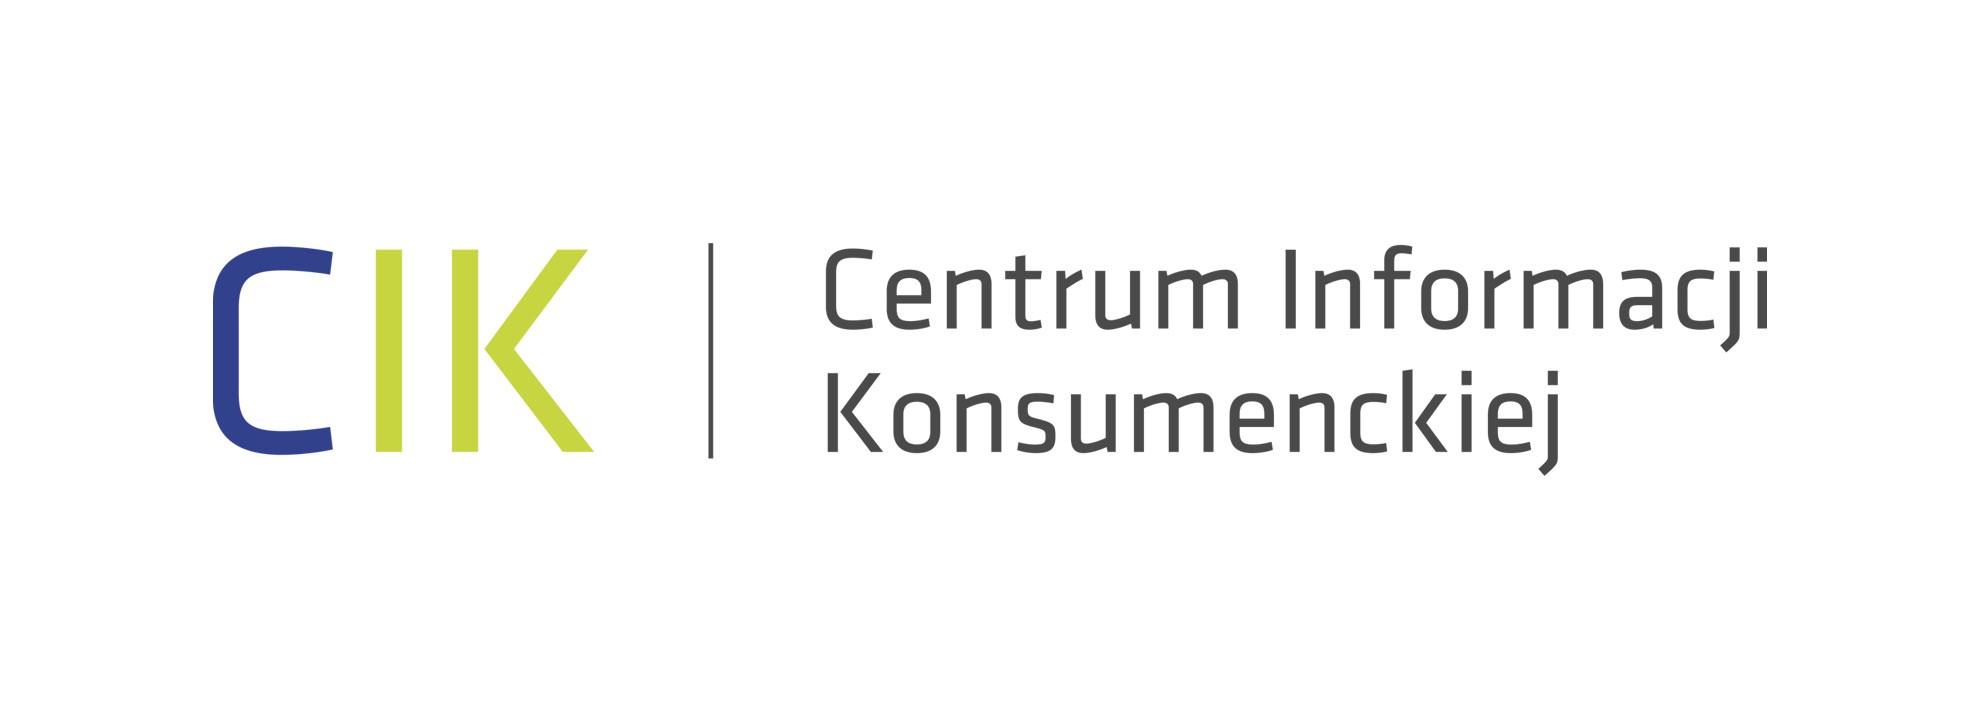 Centrum Informacji Konsumenckiej